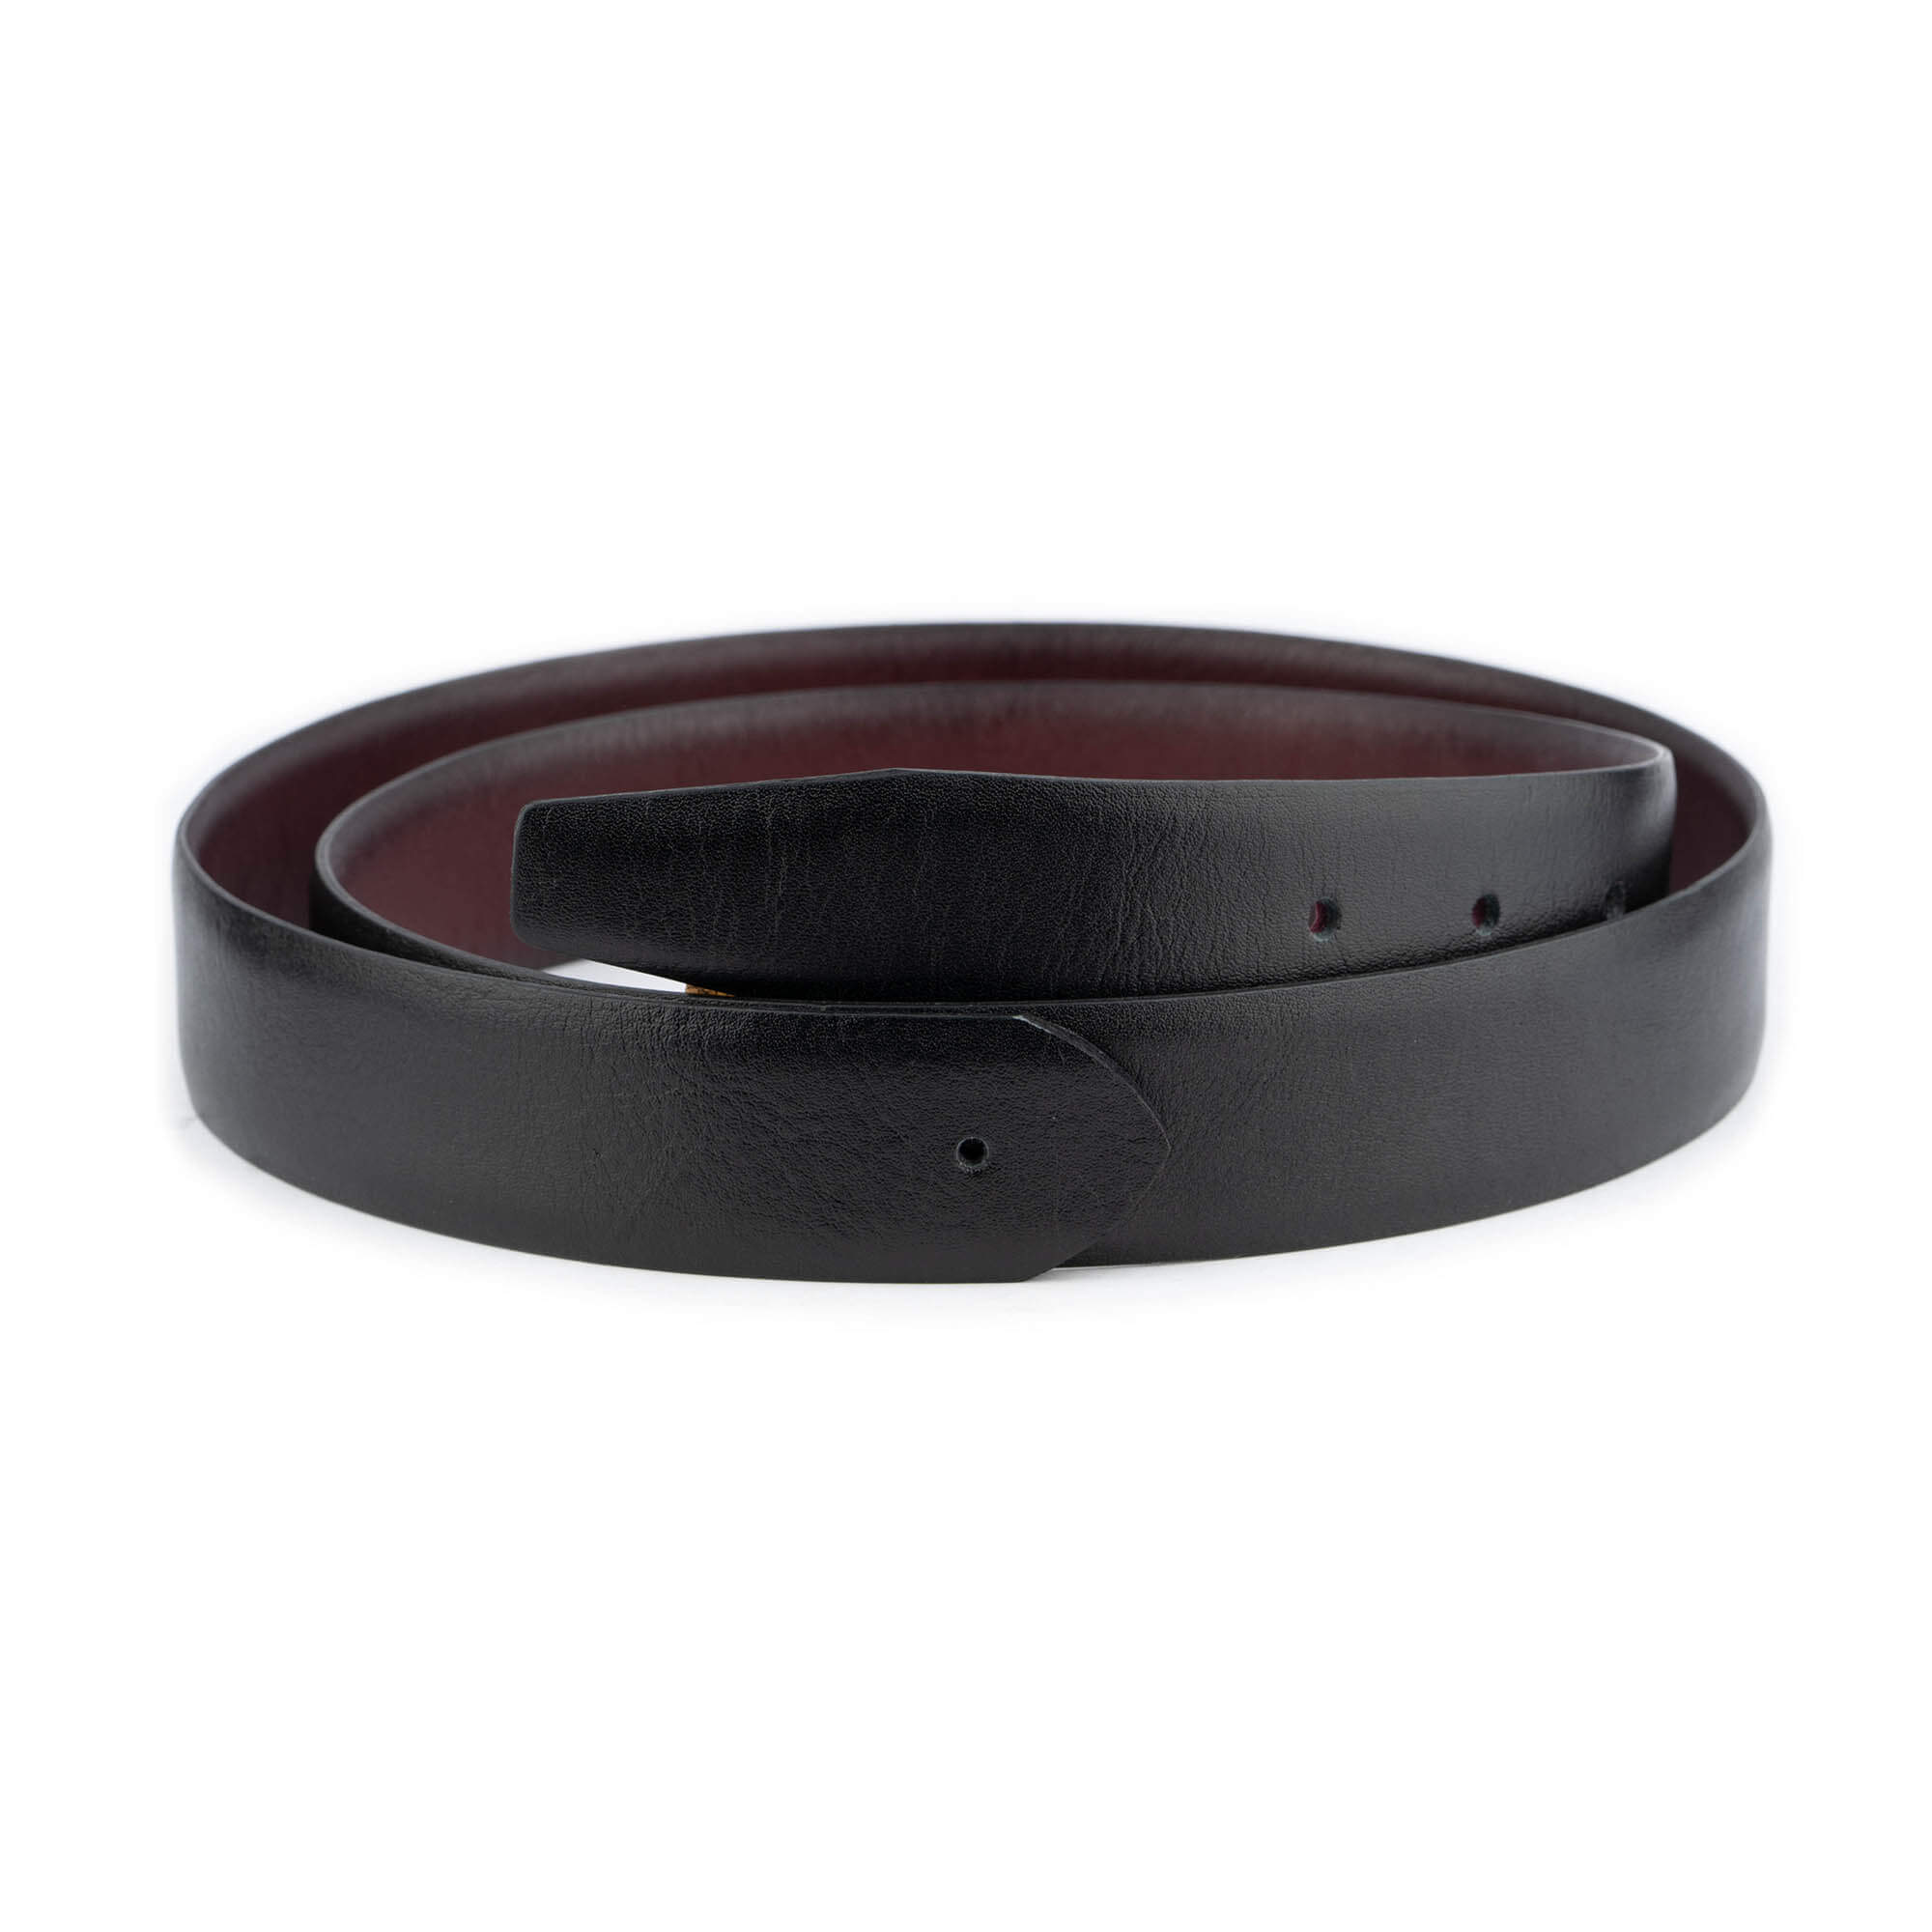 Buy Reversible Belt Straps | Genuine Leather | LeatherBeltsOnline.com